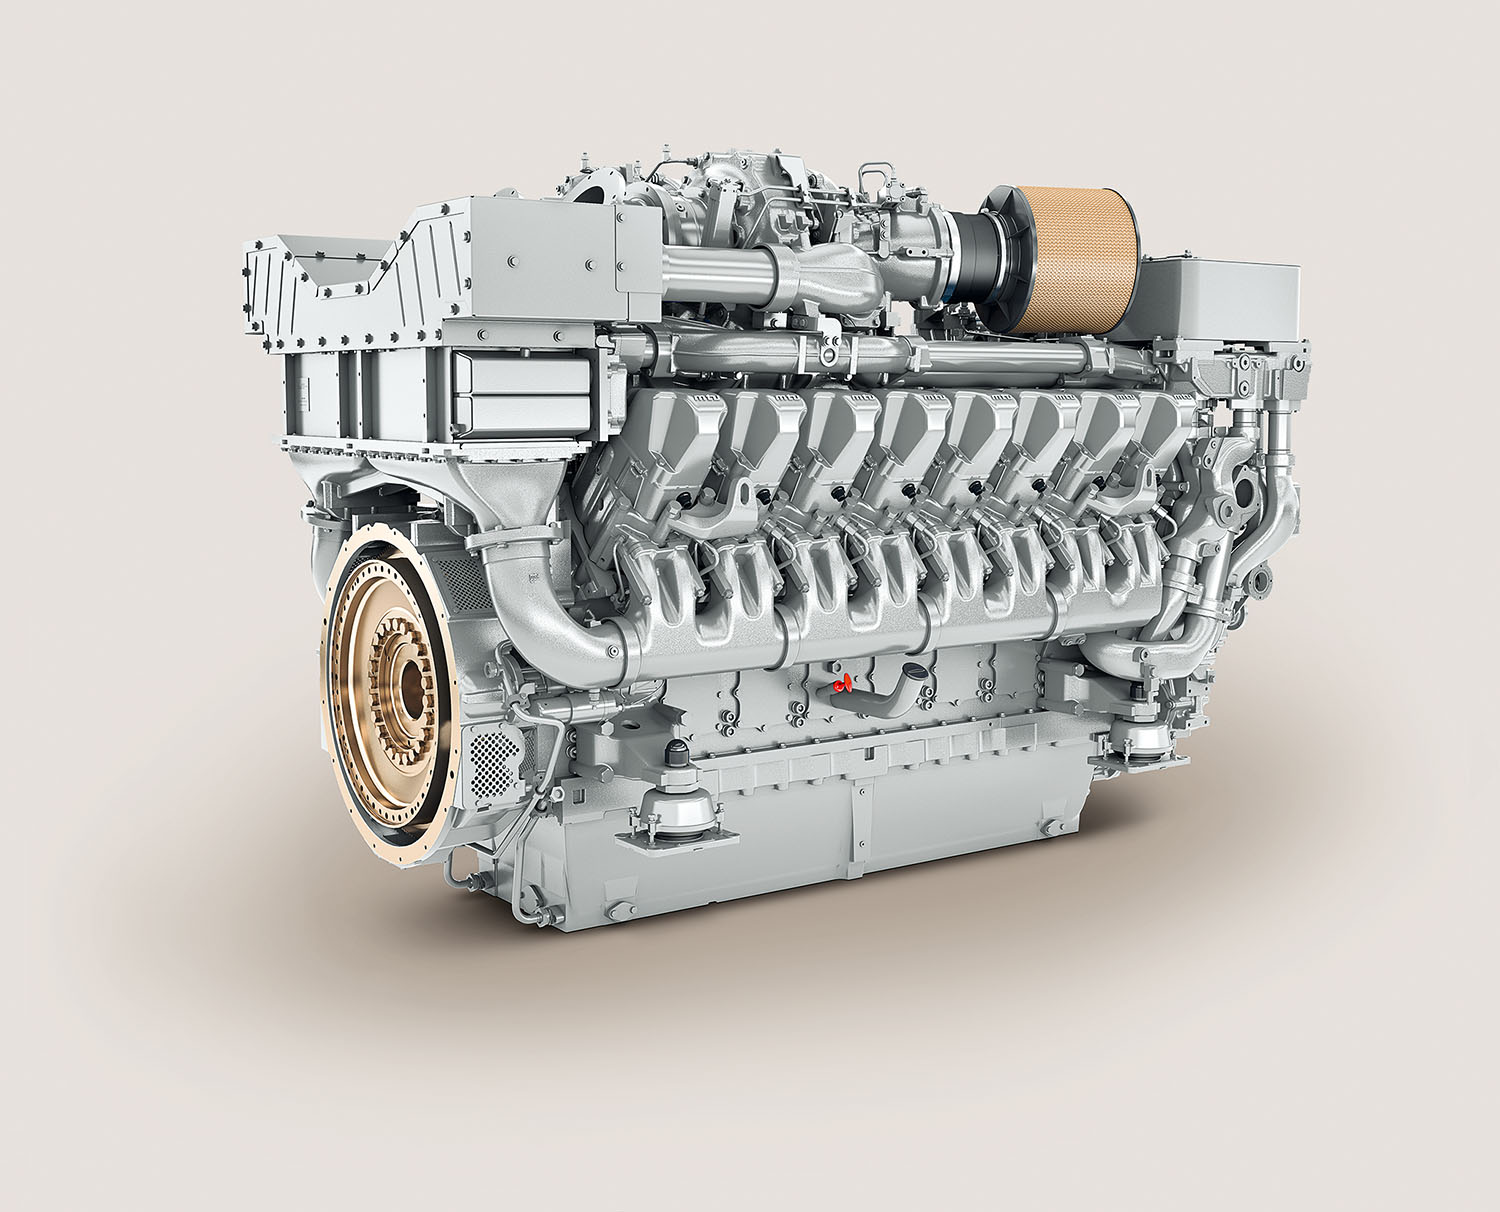 MTU Engines From Rolls-Royce Power New Foss Tugs